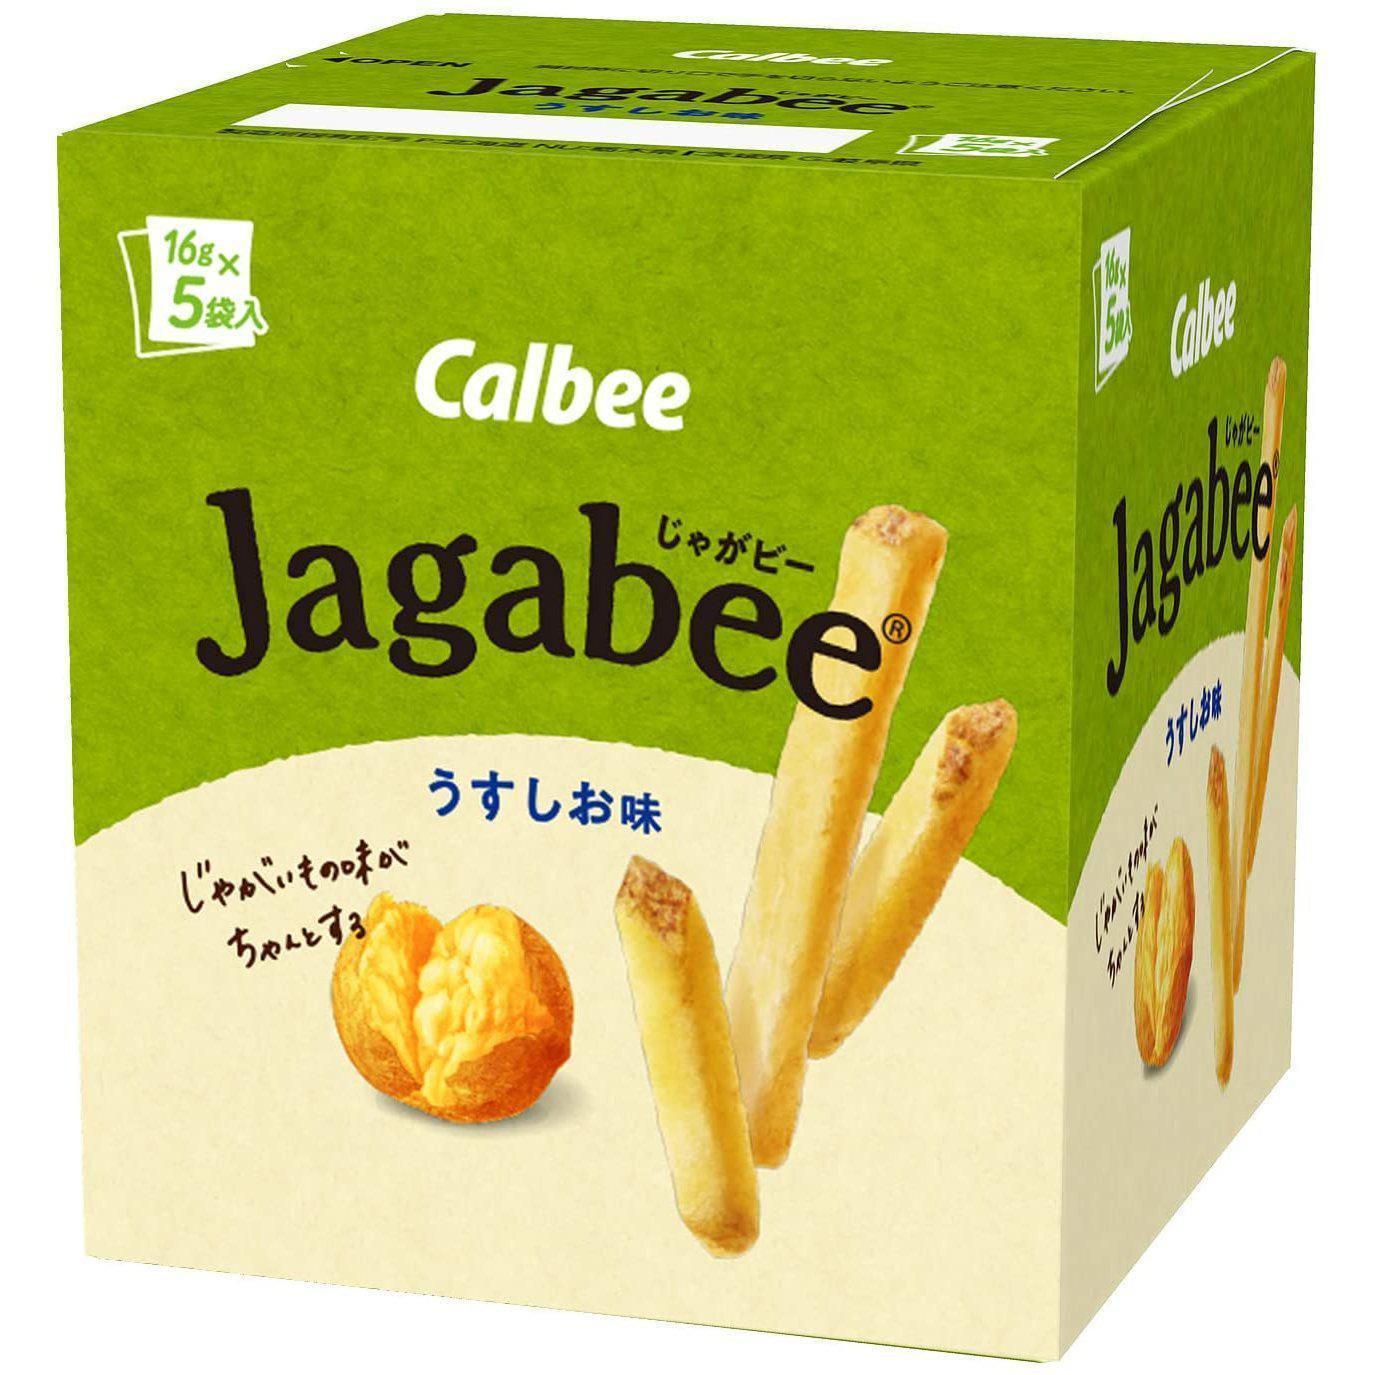 P-1-CALB-JBESAL-1:5-Calbee Jagabee Potato Sticks Snack Lightly Salted (Pack of 5 Boxes).jpg